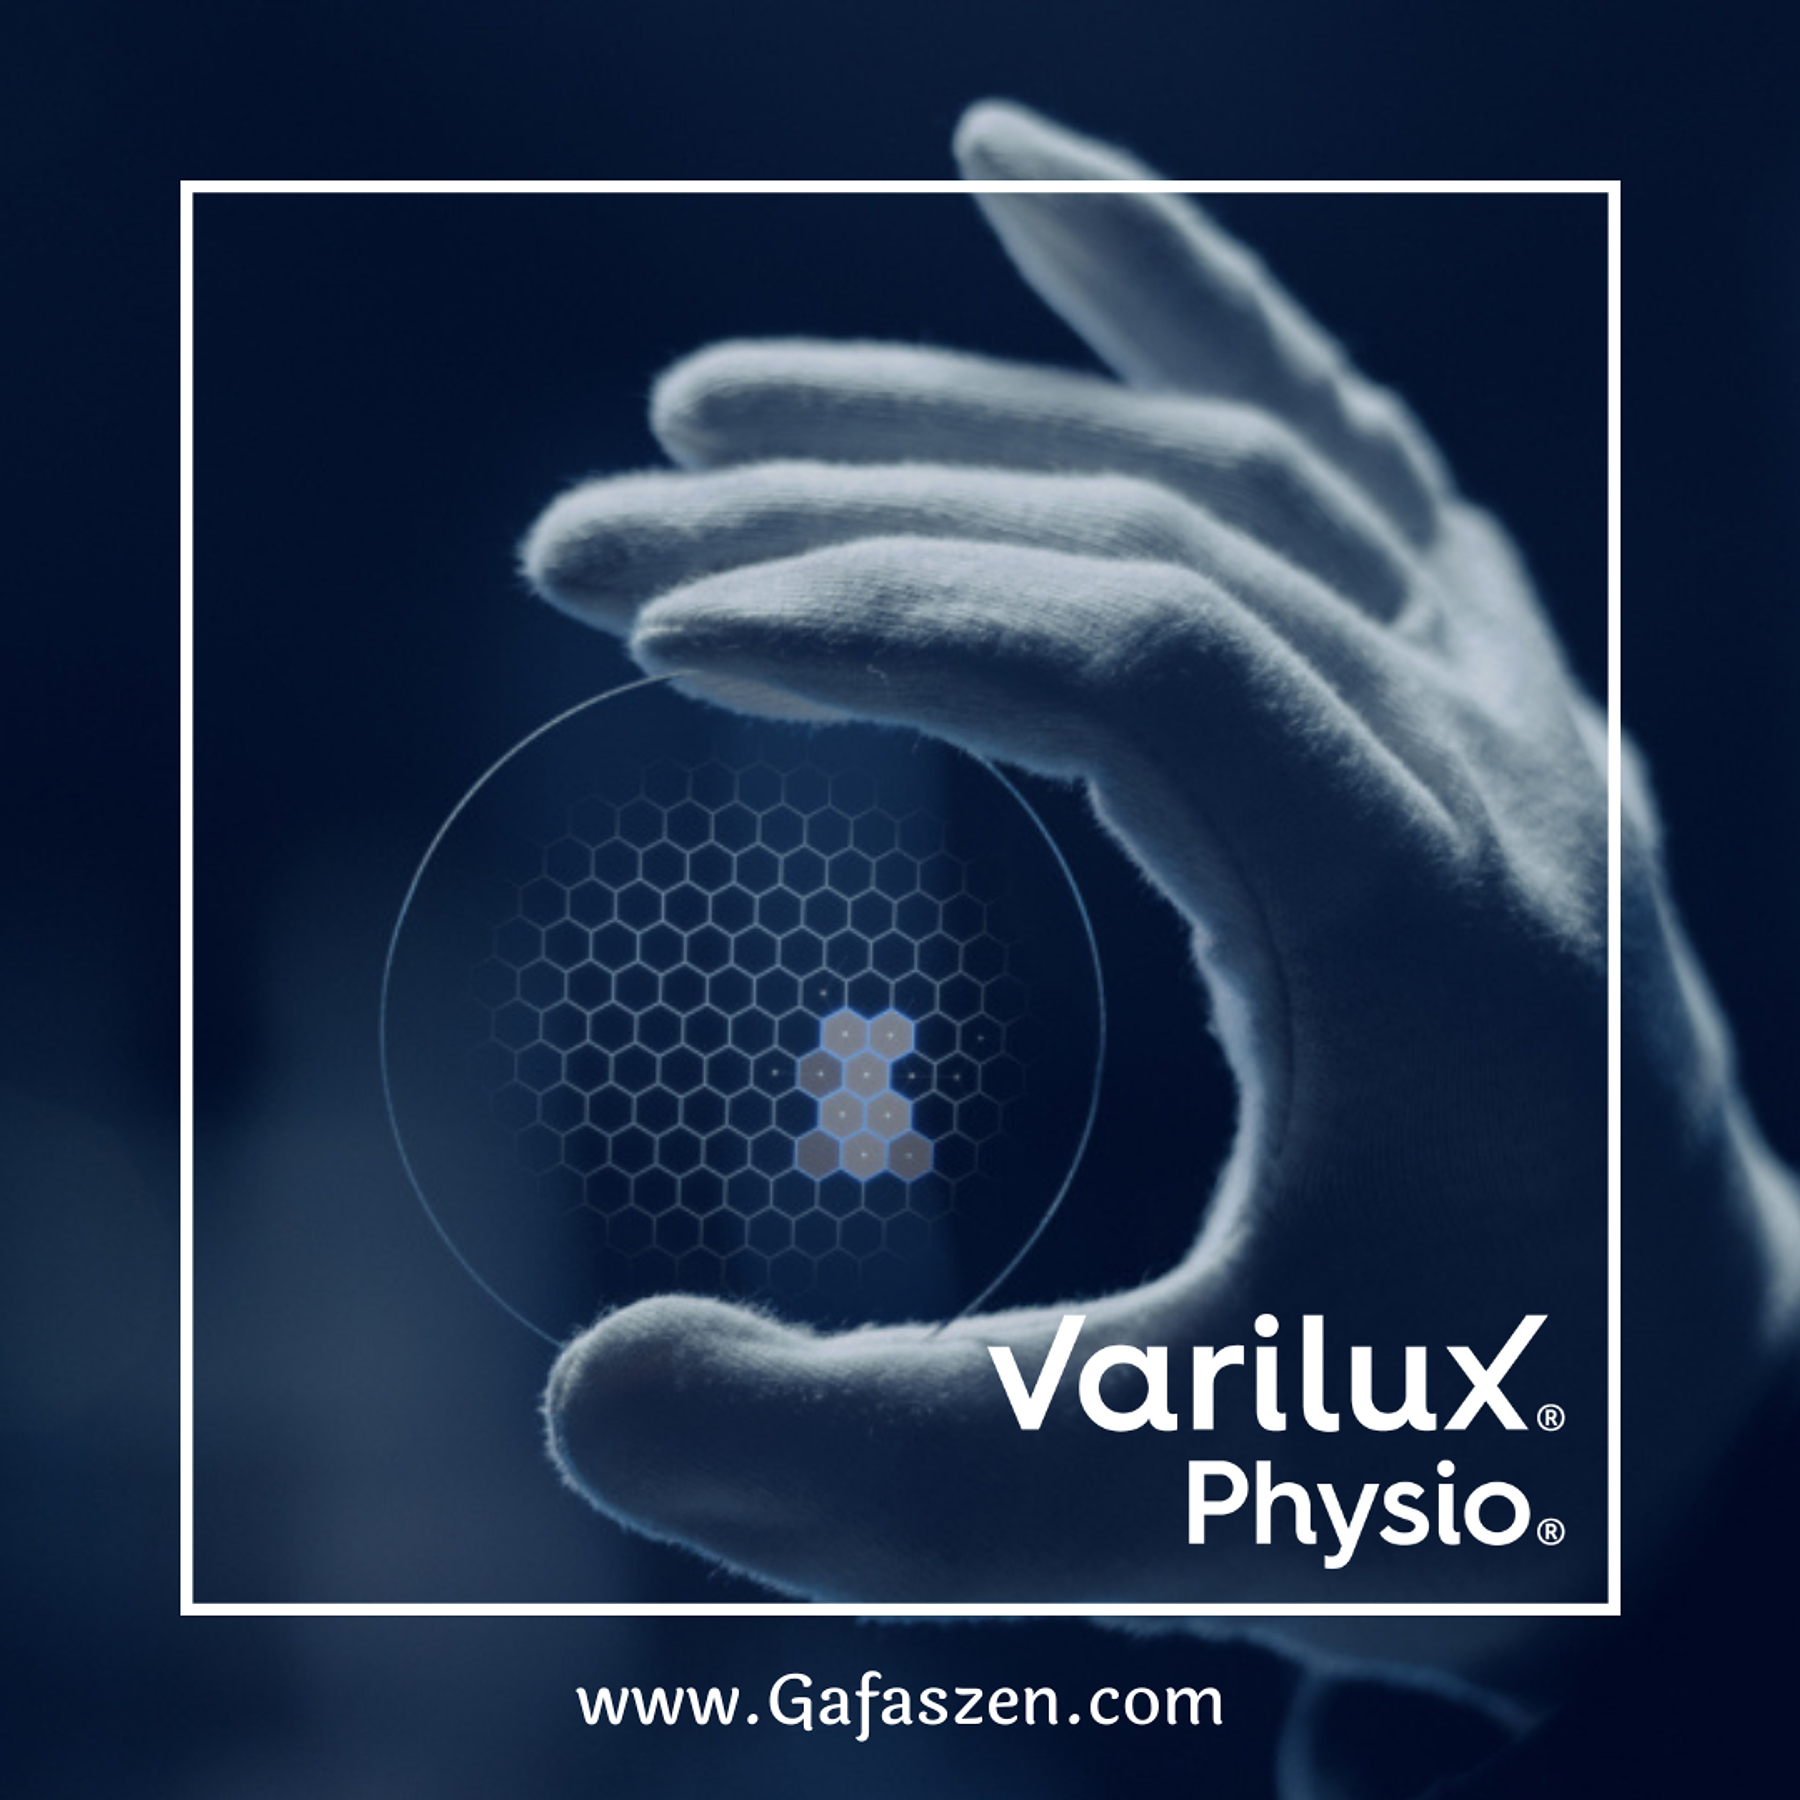 Varilux Physio 3.0 + antirreflejo Crizal Sapphire 360°